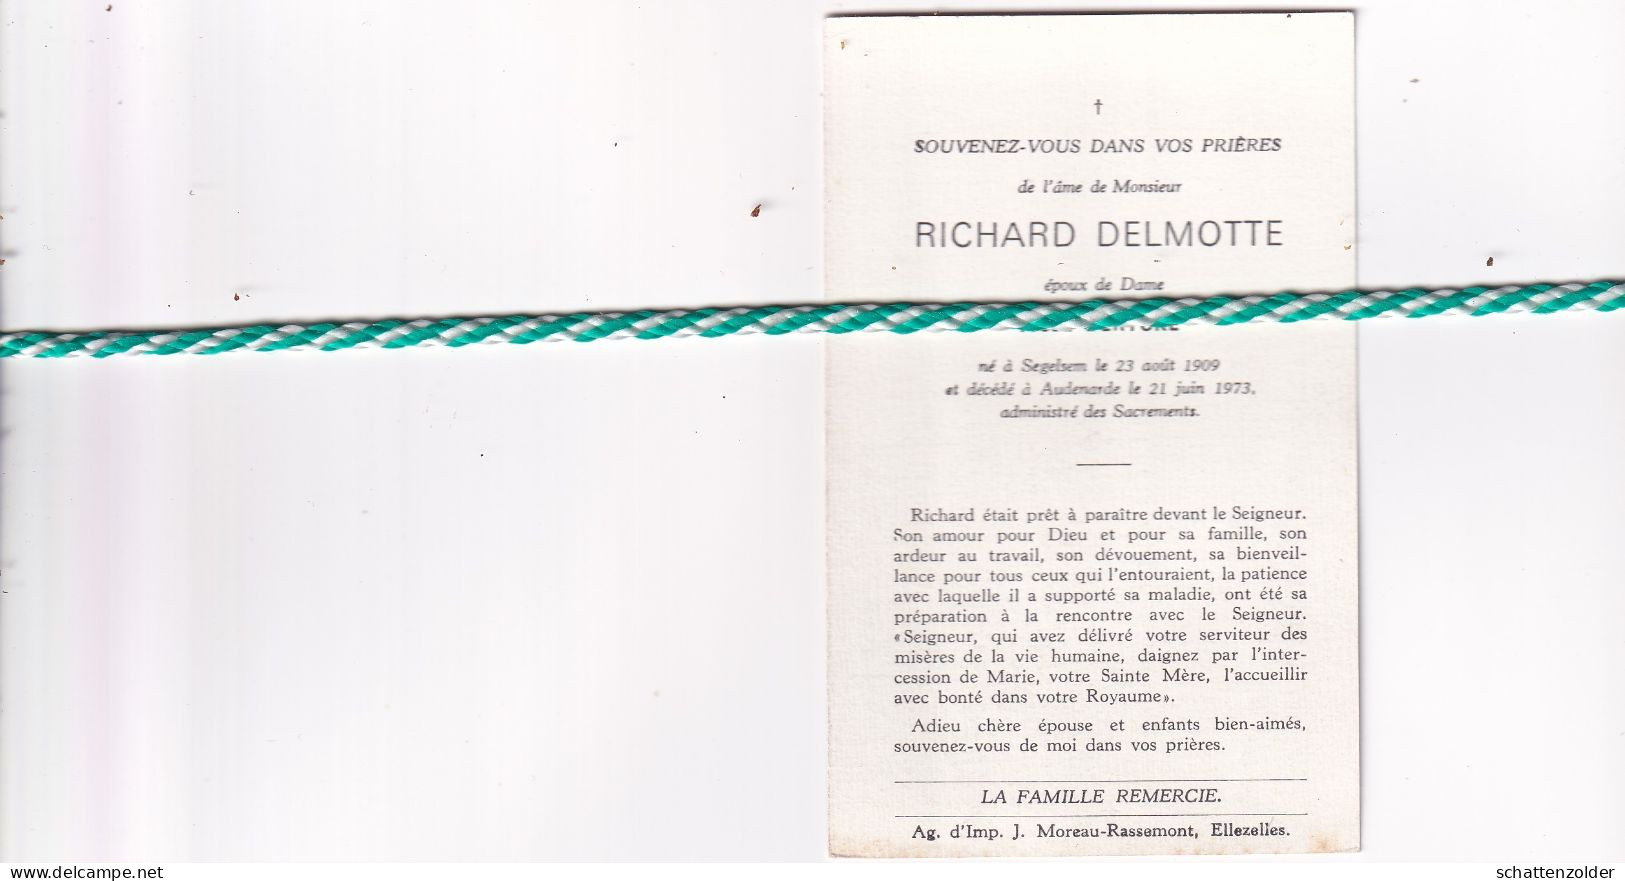 Richard Delmotte-Derycke, Segelsem 1909, Audenarde 1973 - Décès